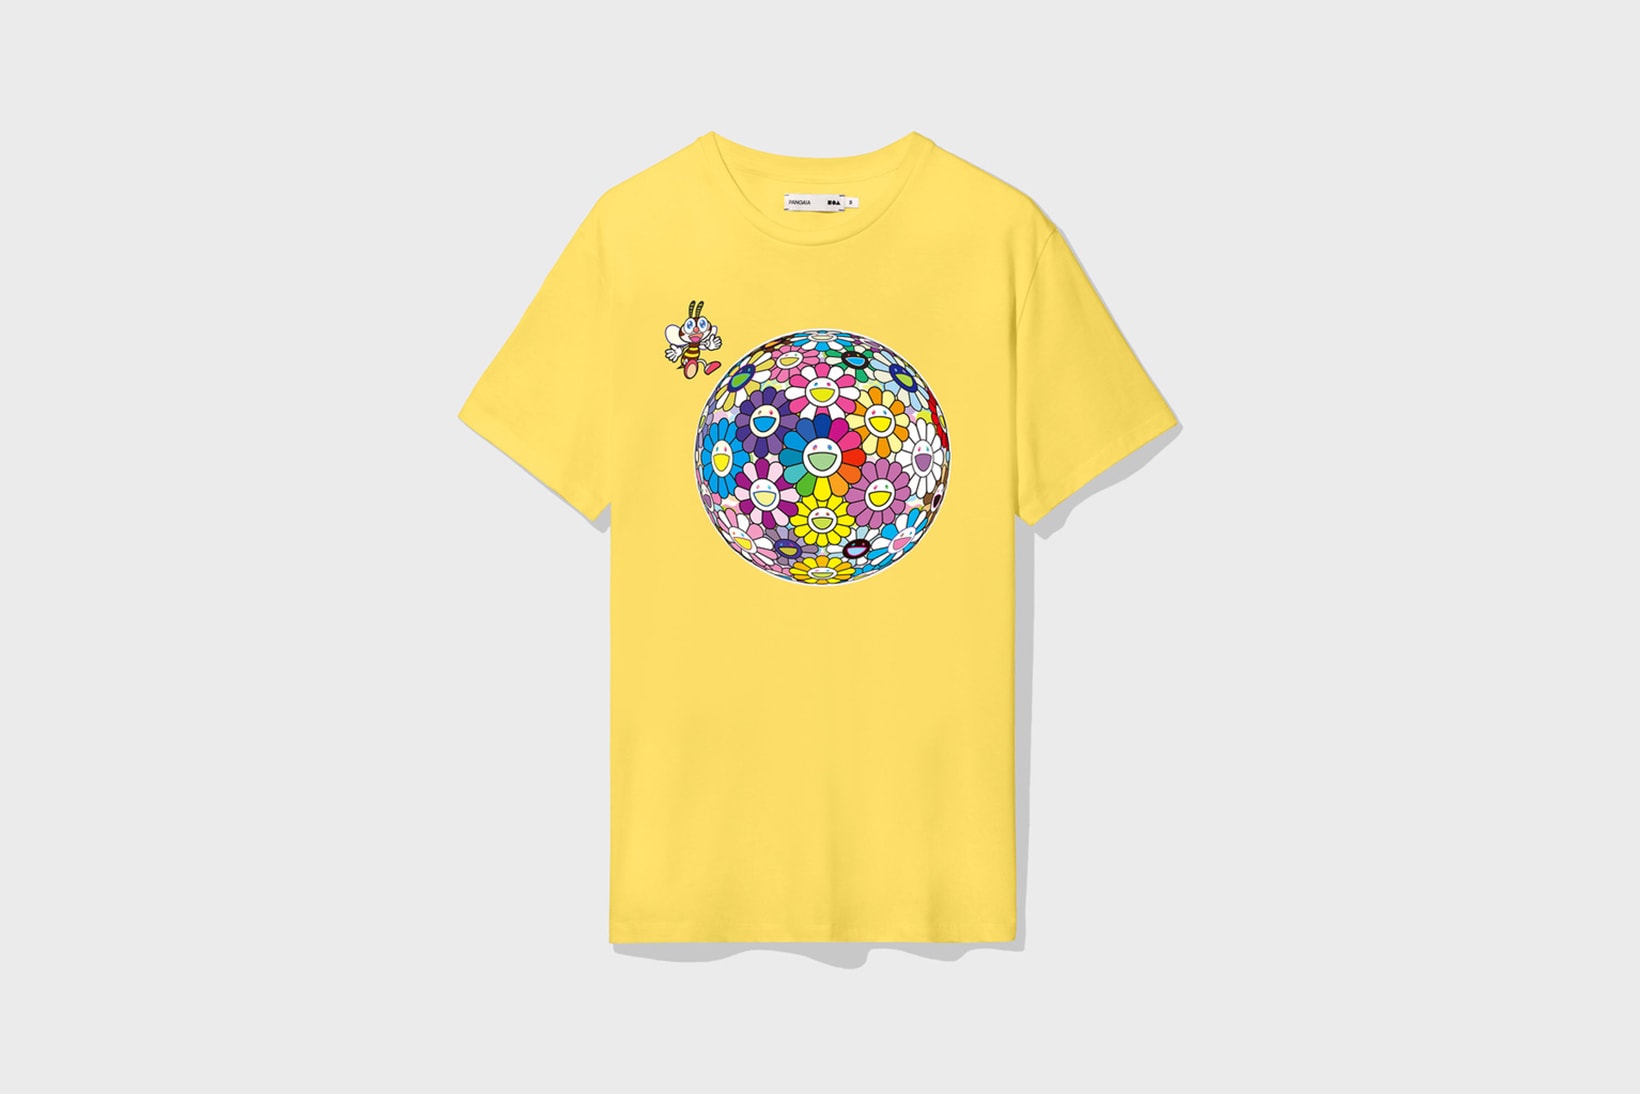 Takashi Murakami x Pangaia Collaboration Collection Hoodie T-Shirt Kaikai Kiki Flower Bee